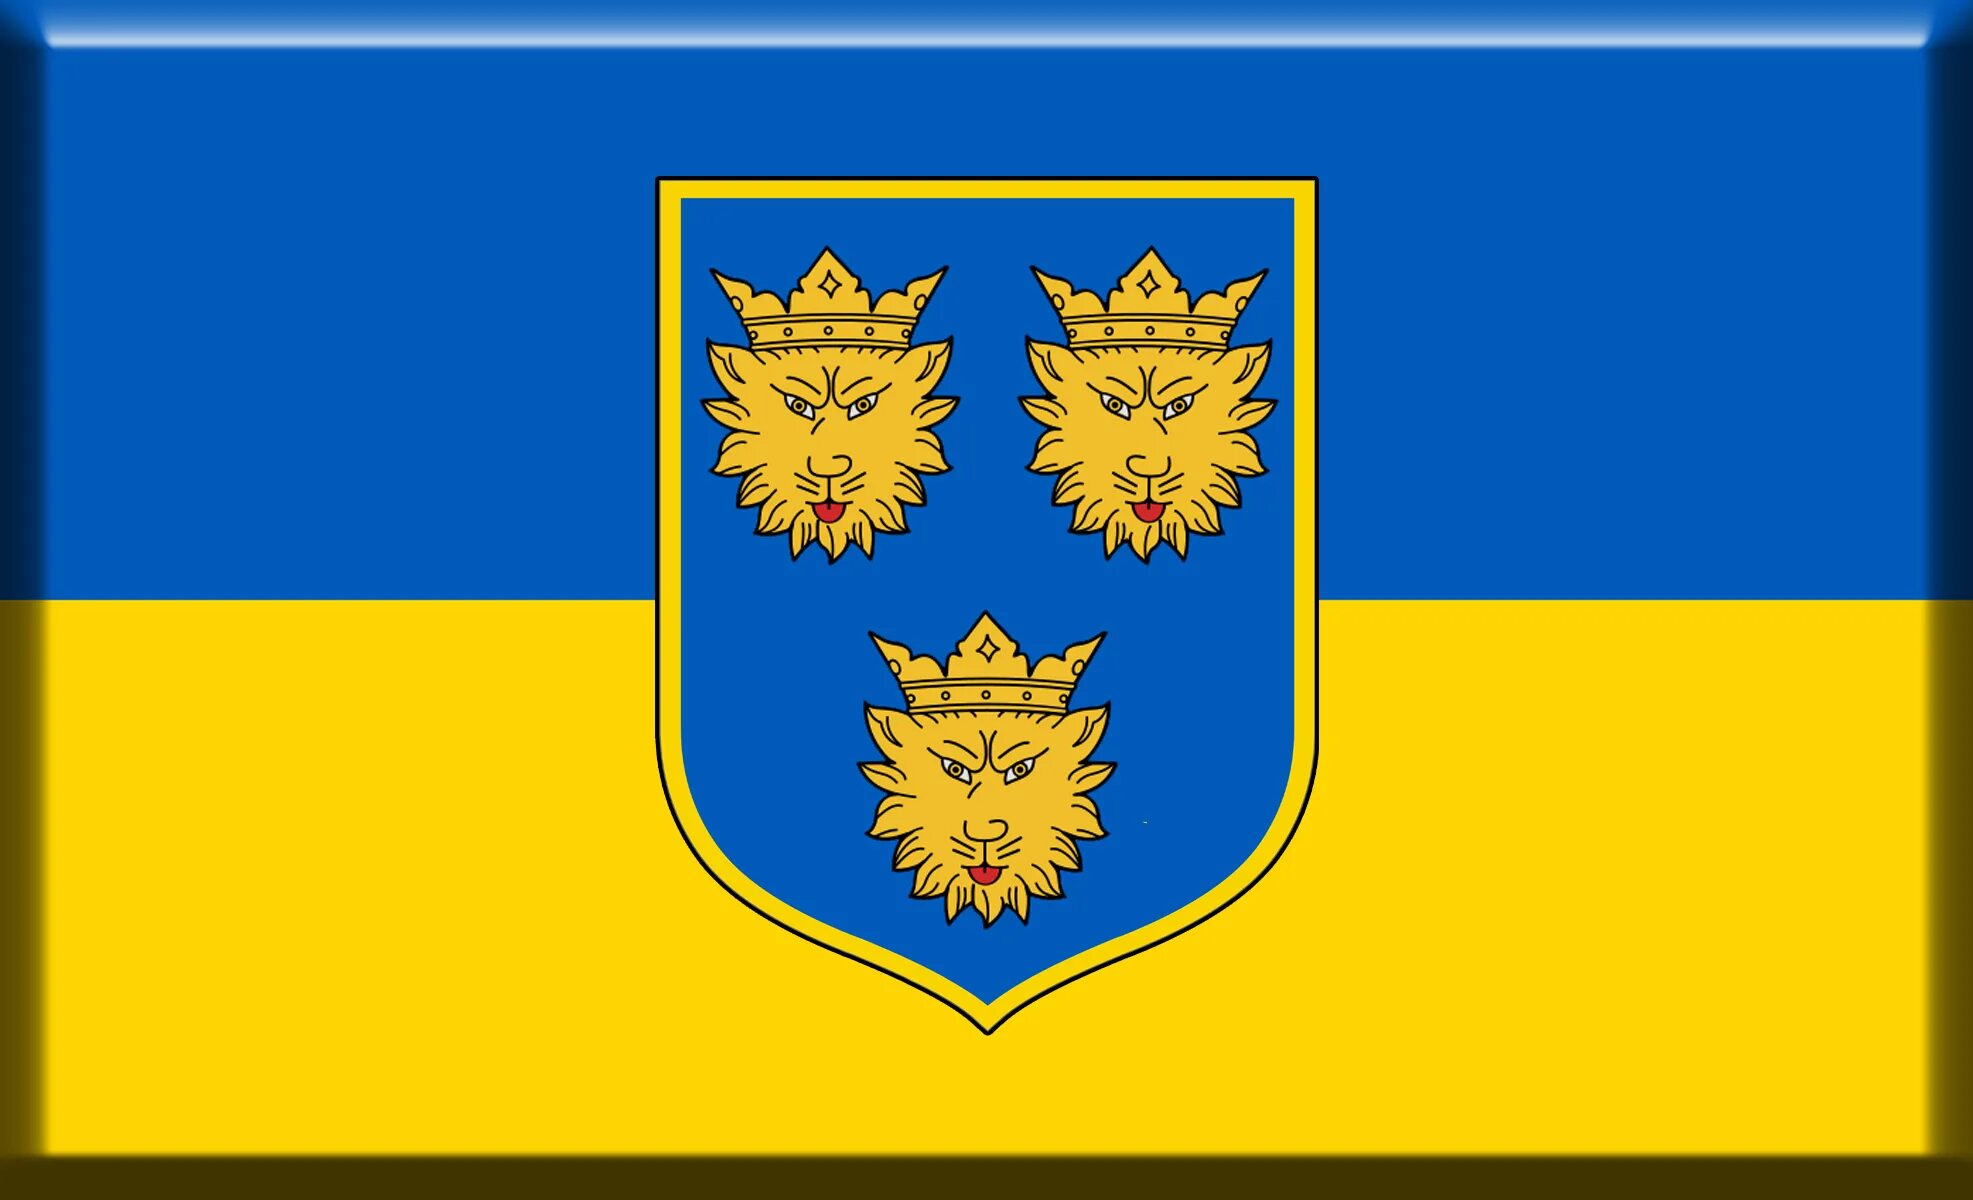 Королевство Далмация флаг. Герцогство Брауншвейг флаг Украины. Флаг Далмации и Украины. Флаг Далмации альтернативный.